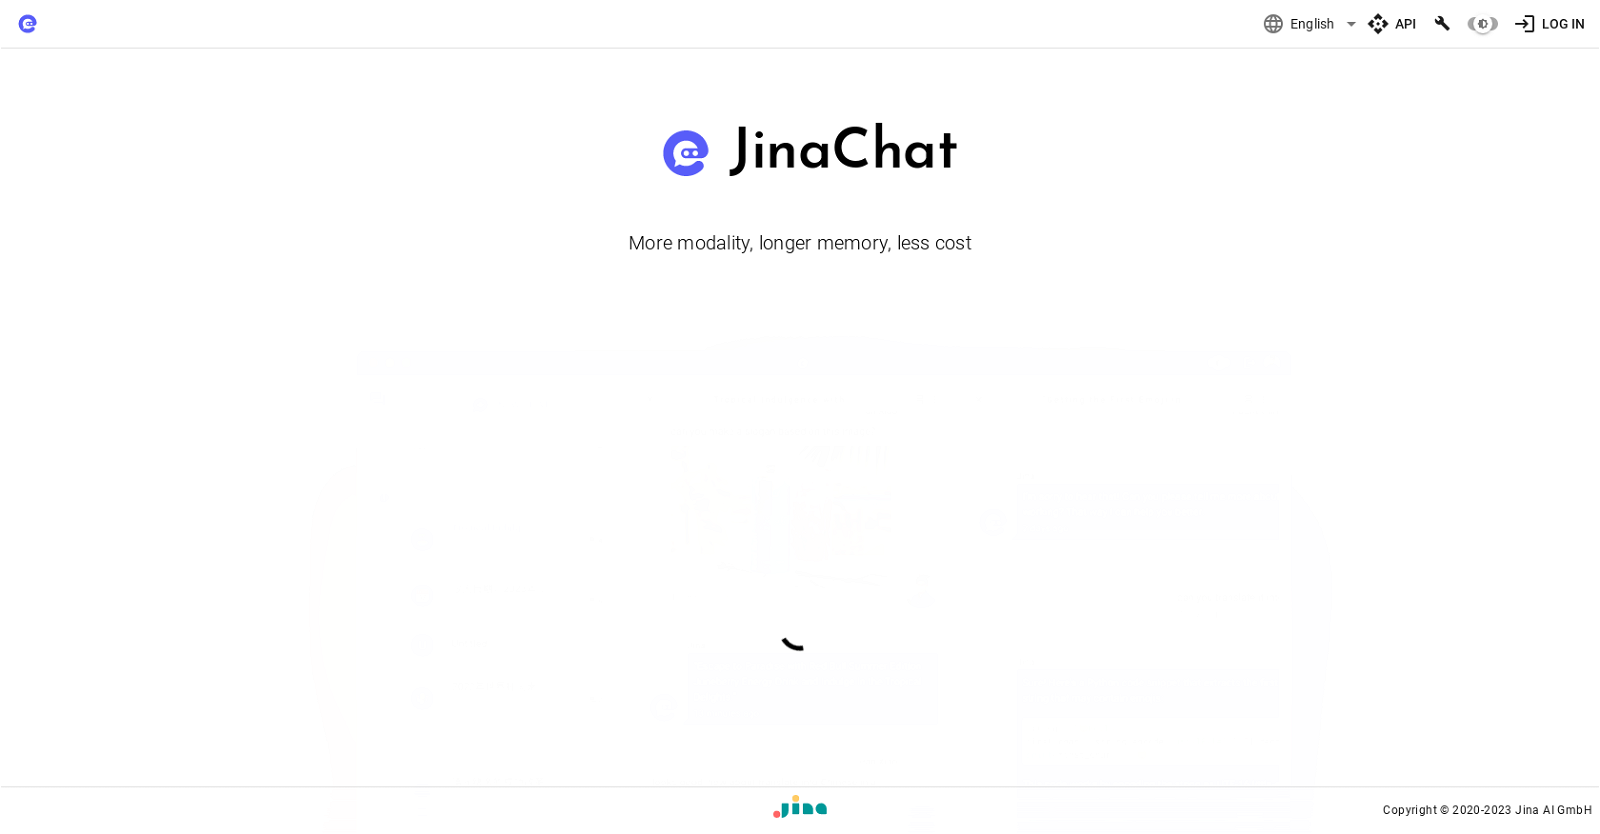 JinaChat